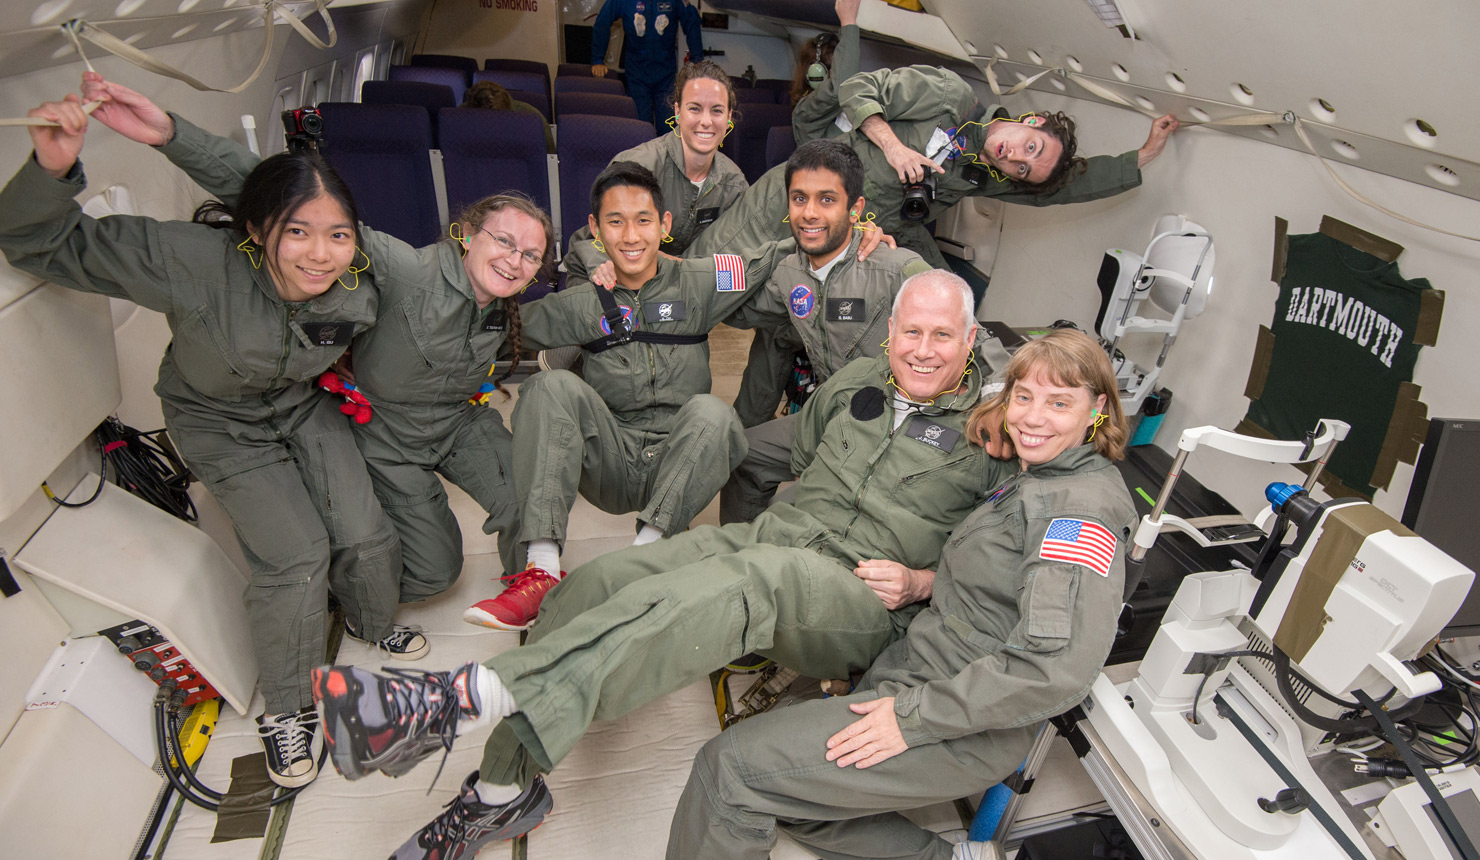 The research team in the NASA C-9 aircraft. Front row, left to right: Helen Gu DC'18, Christine Toutain-Kidd, Sean Oh DC'17, Gautam Babu DC'16, Jay Buckey, Abigail Fellows. Back row: Allison Anderson, Jacob Gaba DC'16.